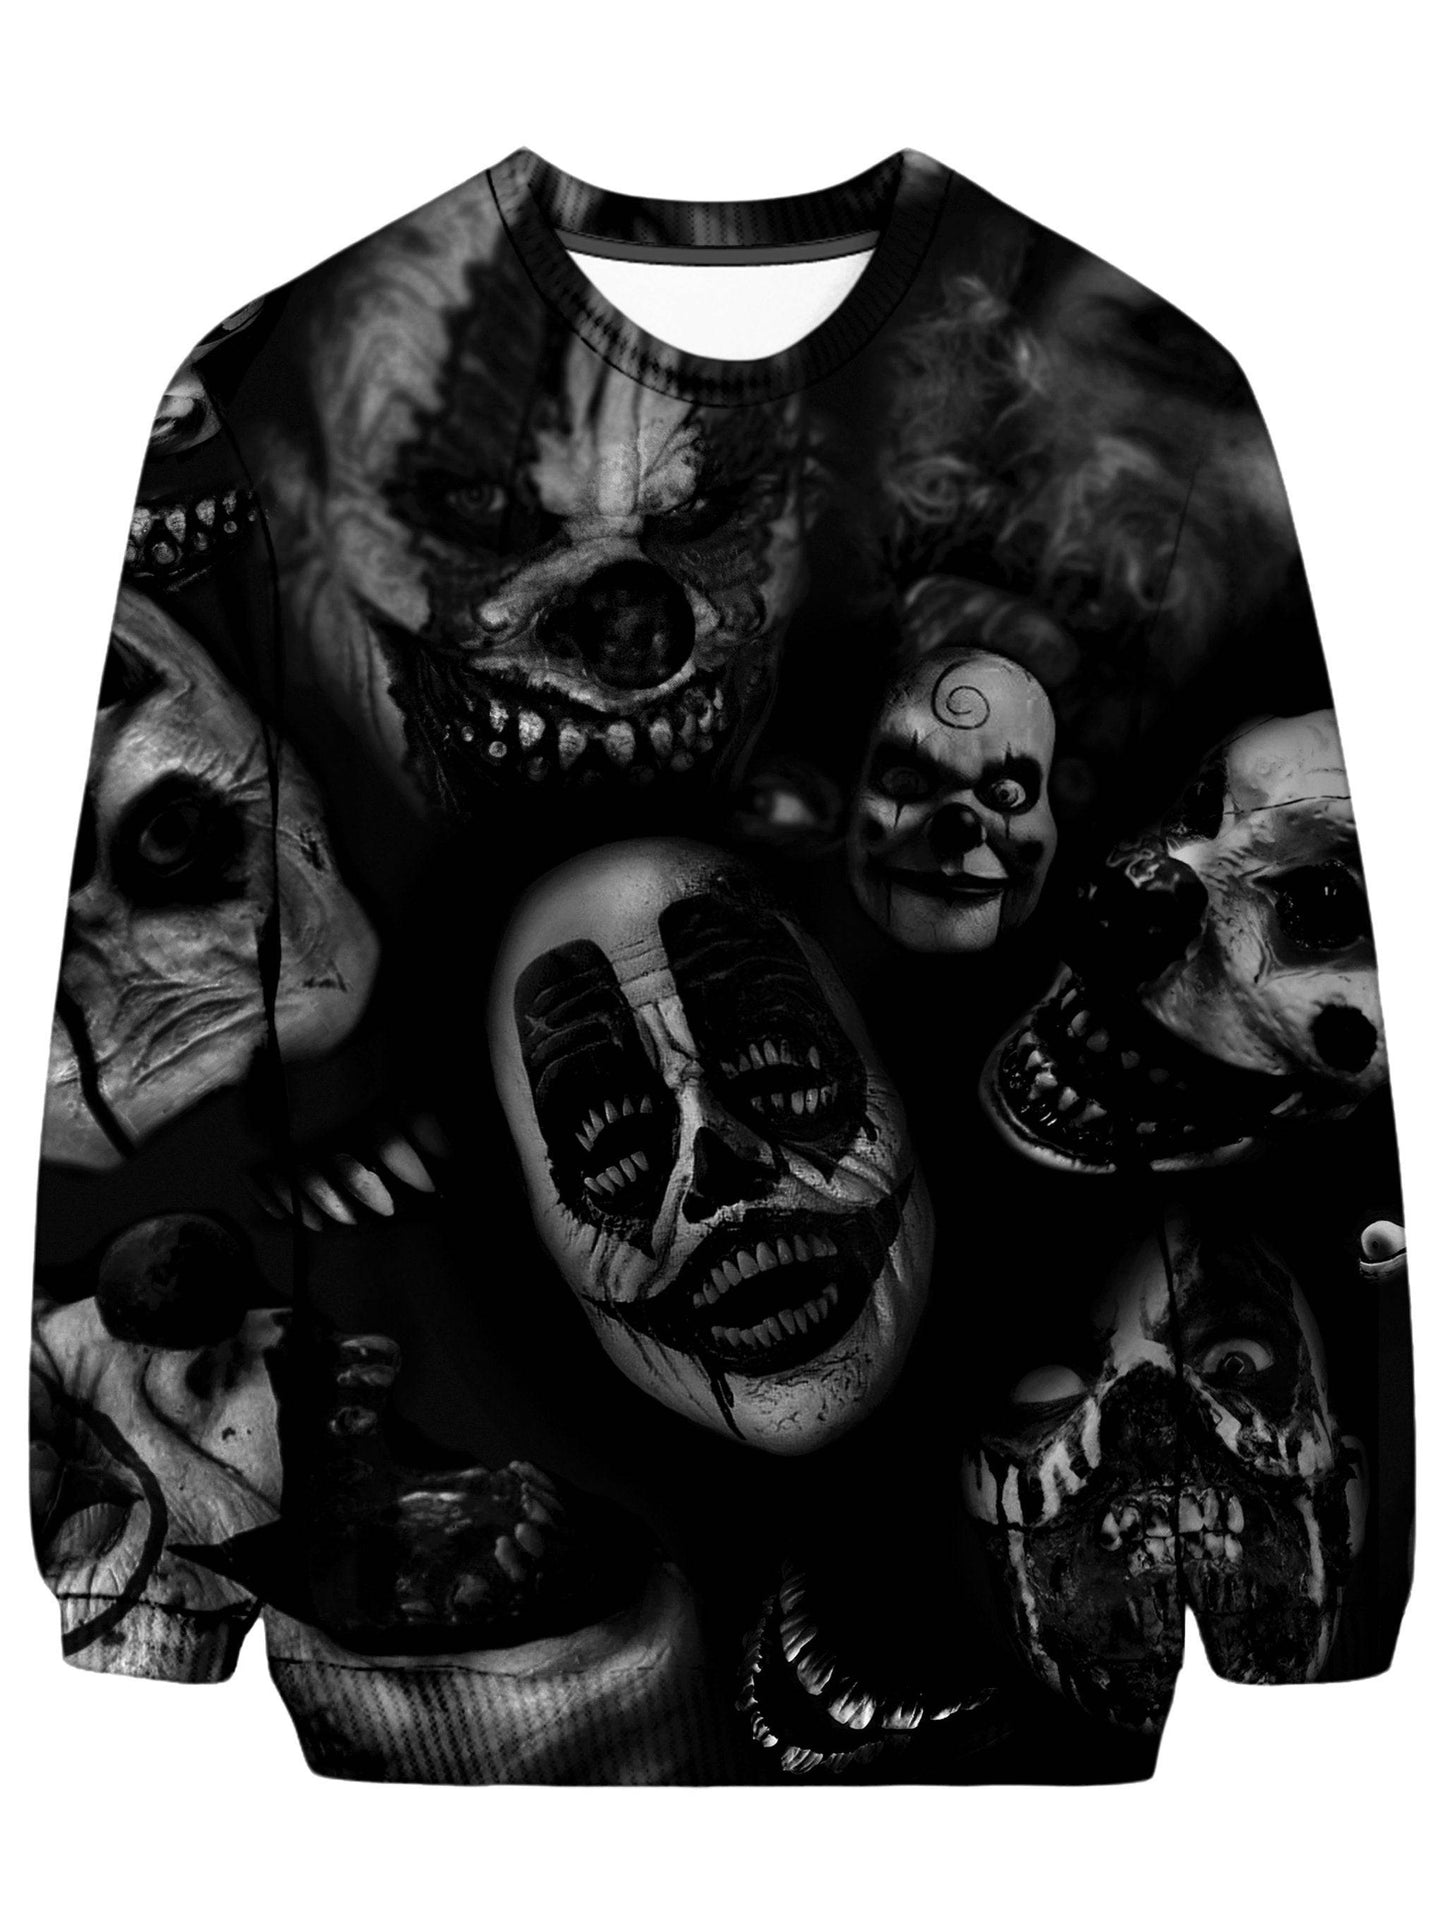 Clowns Sweatshirt, iEDM, | iEDM